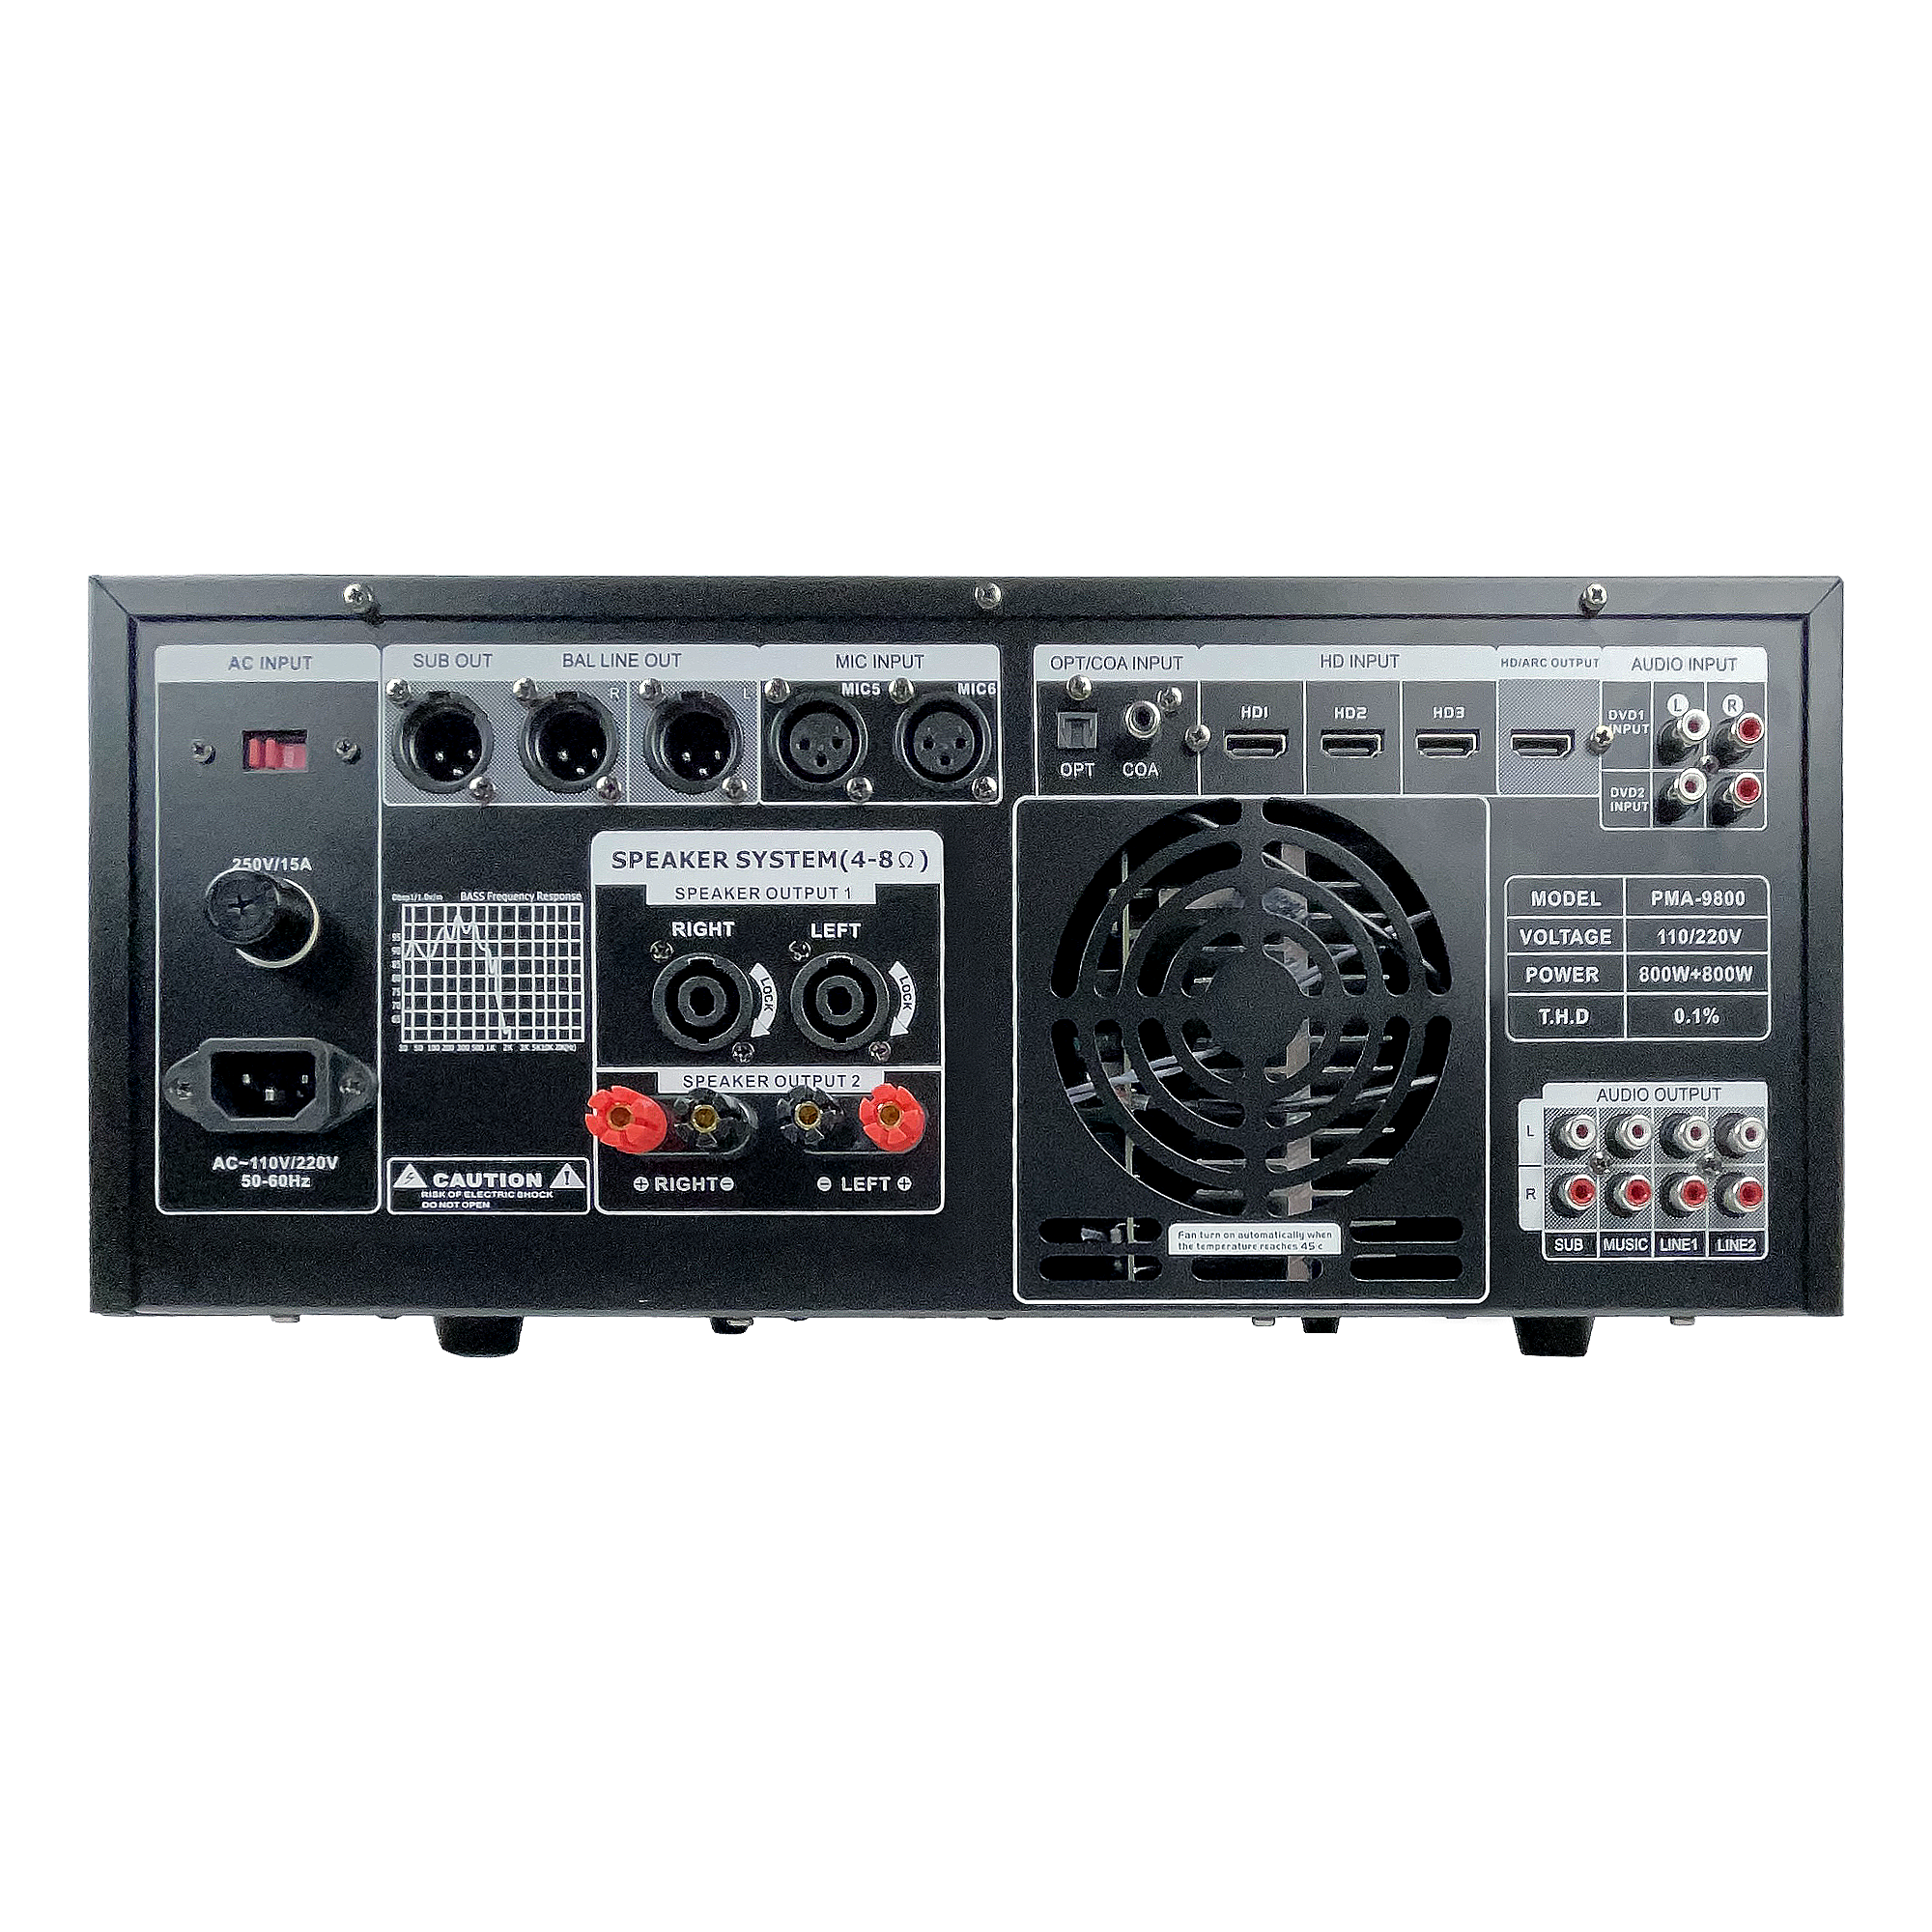 ImPro PMA-9800 Elite Professional 1600W Karaoke Mixing Amplifier for Smart TV Singing on Youtube